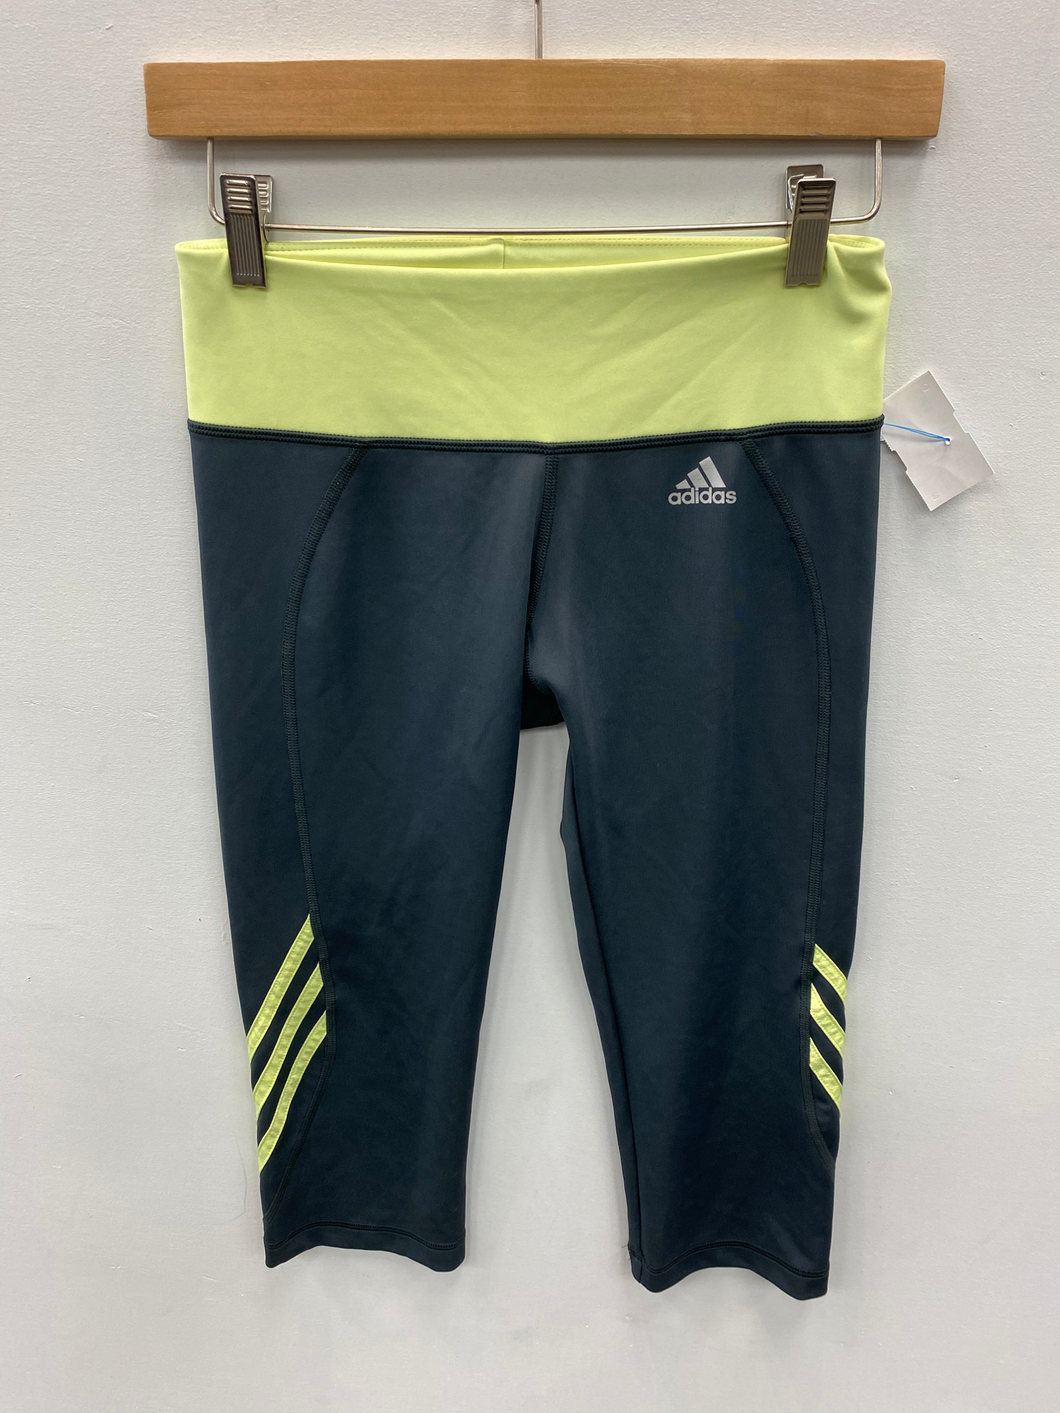 Adidas Athletic Pants Size Medium